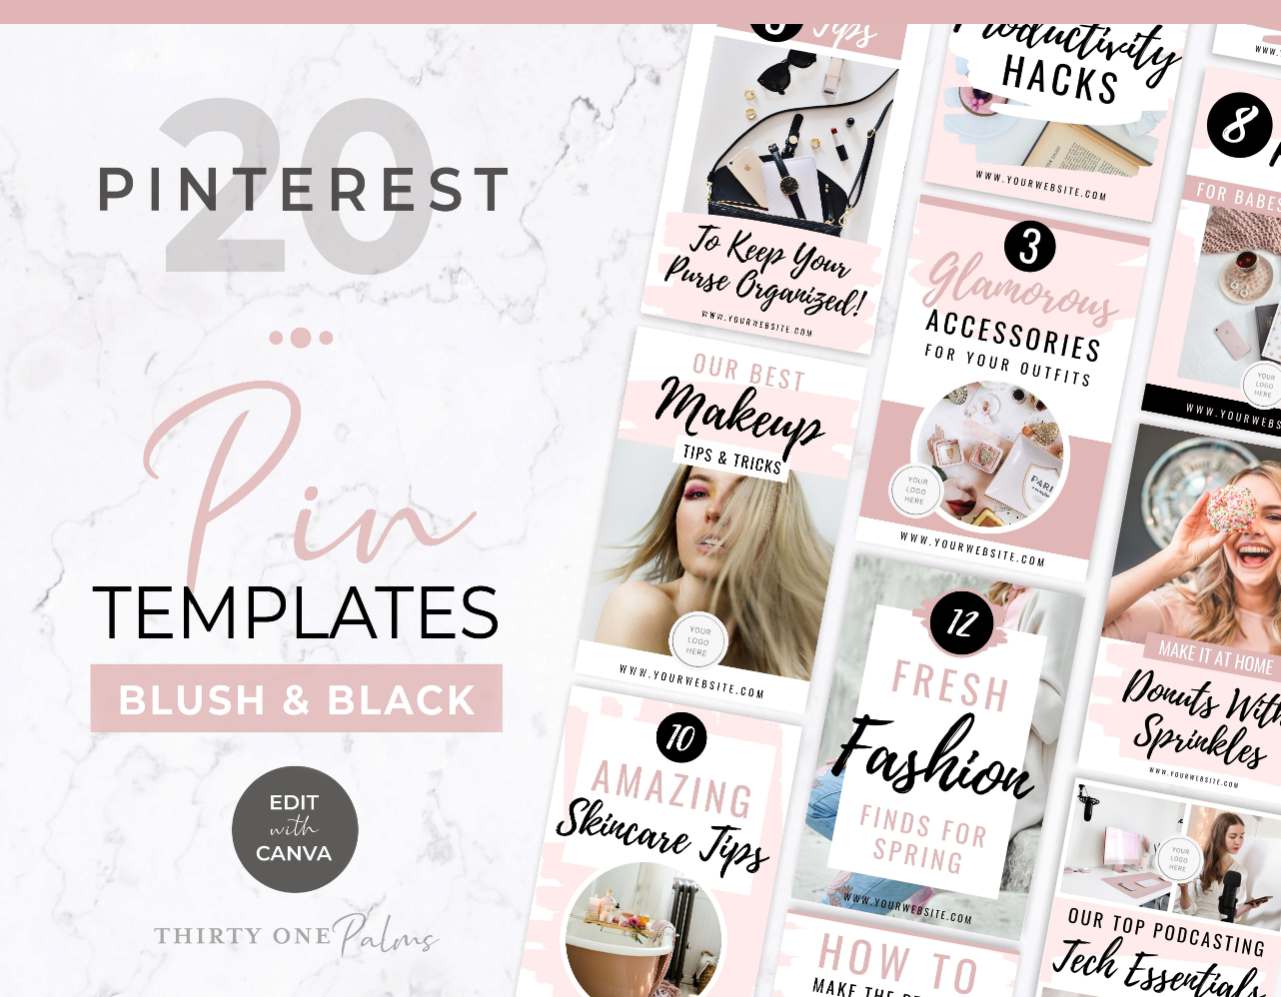 Pinterest Templates for Canva – Blush & Black